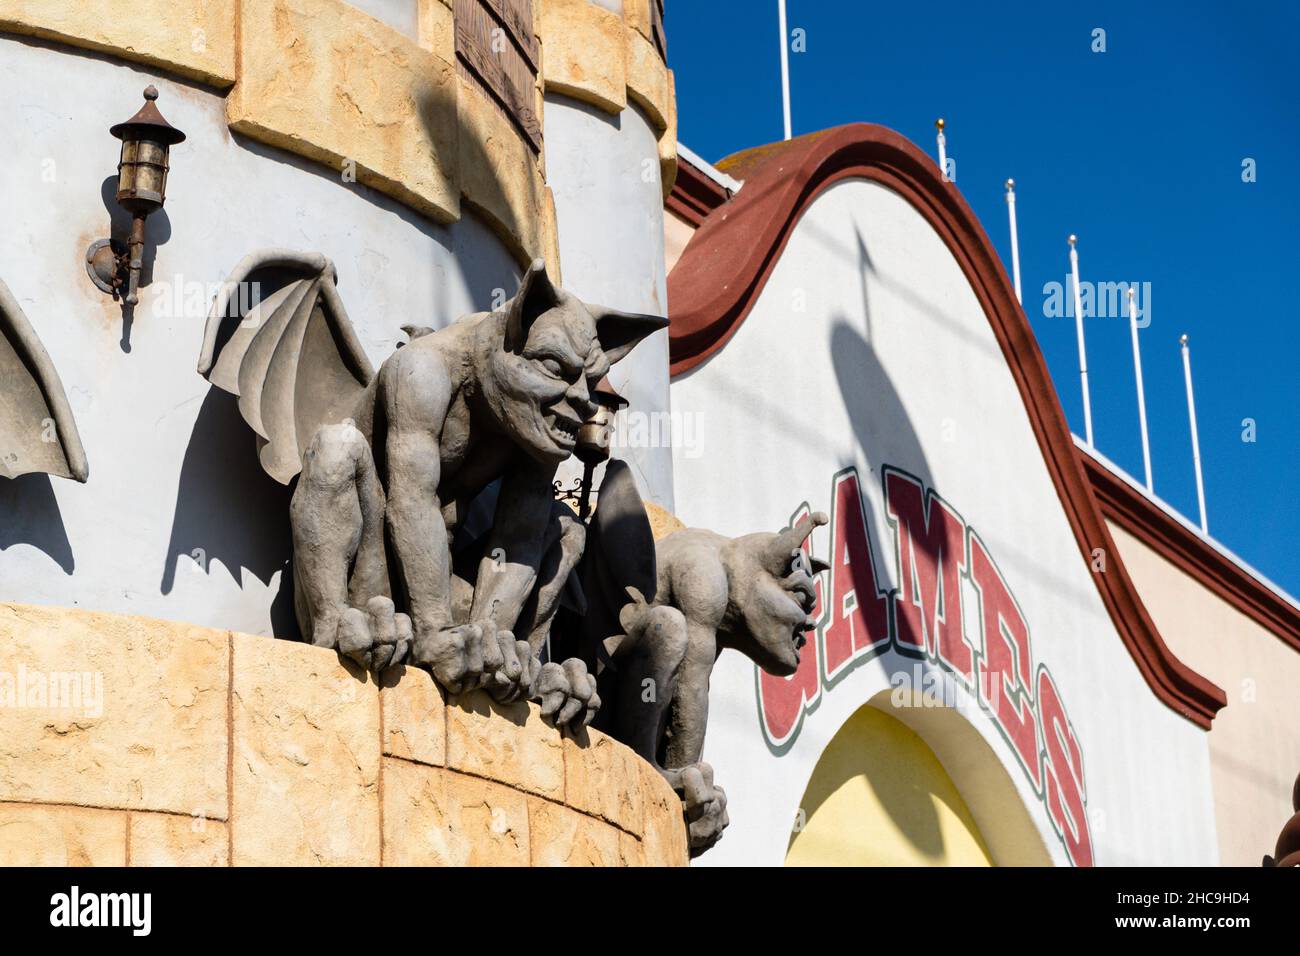 Close up shot of gargoyle of the haunted House attraction in Santa Cruz Boardwalk, California USA Stock Photo